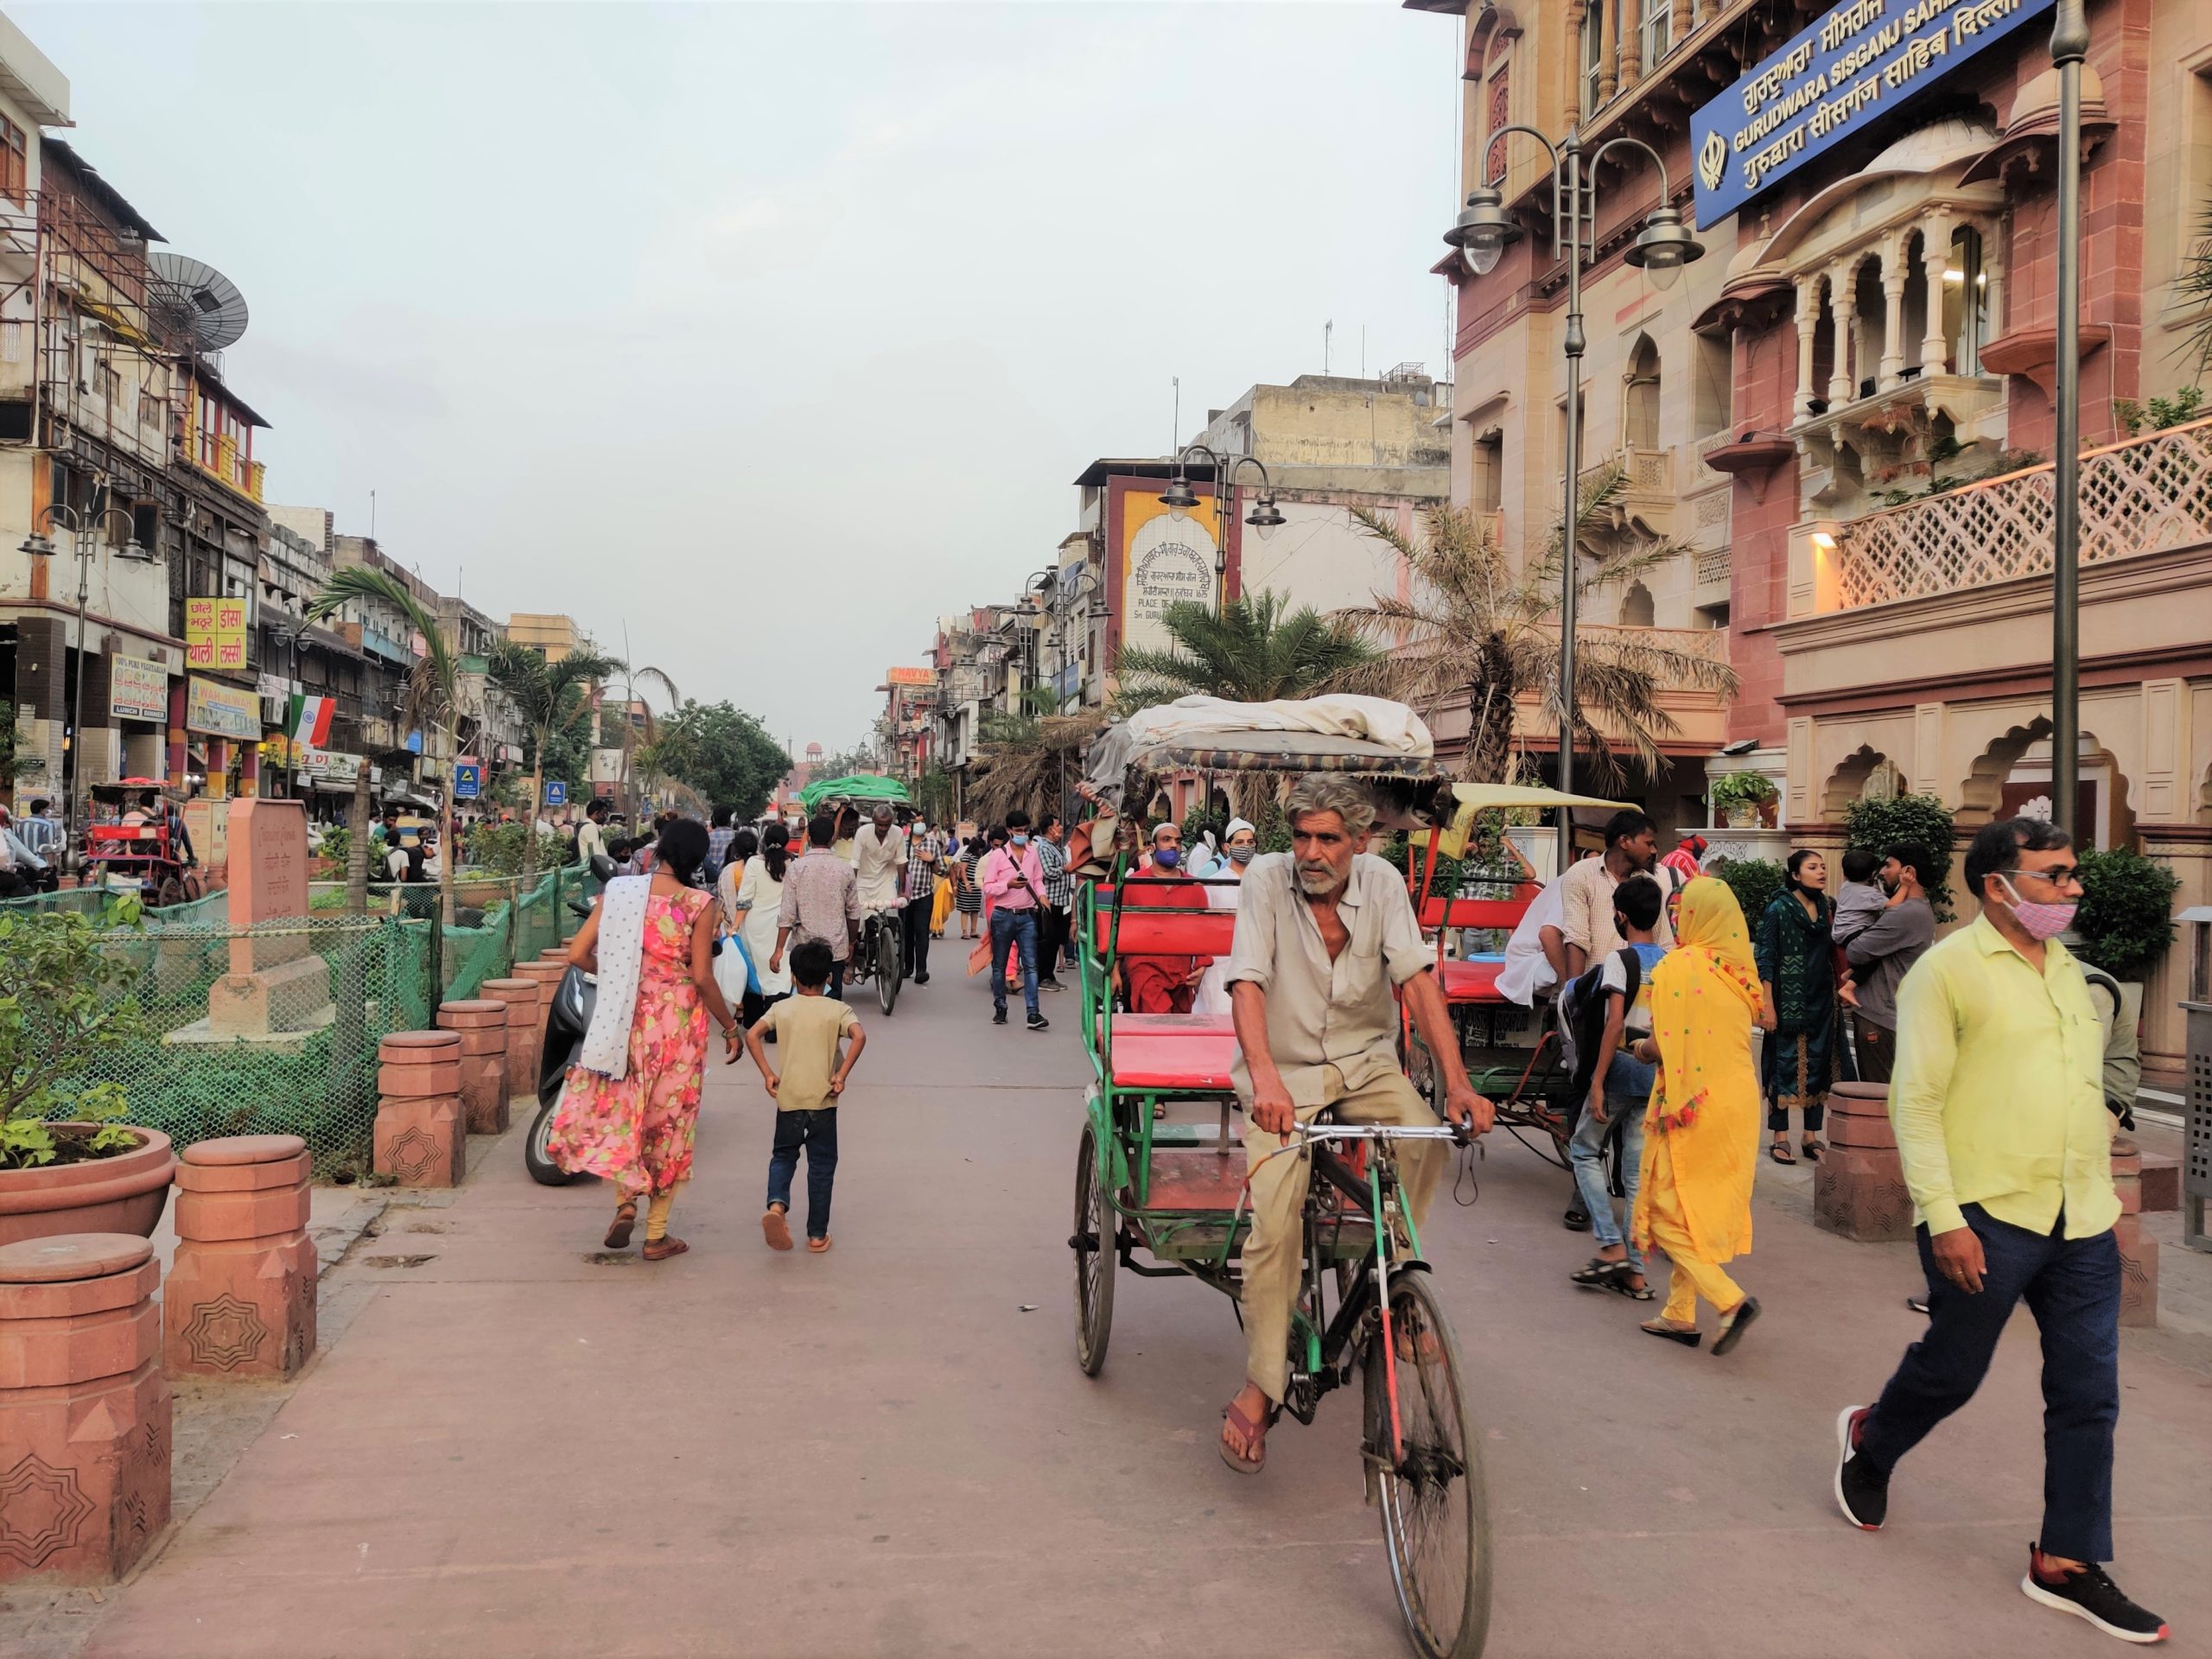 Pedestrians compete with rickshaws at Chandni Chowk’s overhauled street